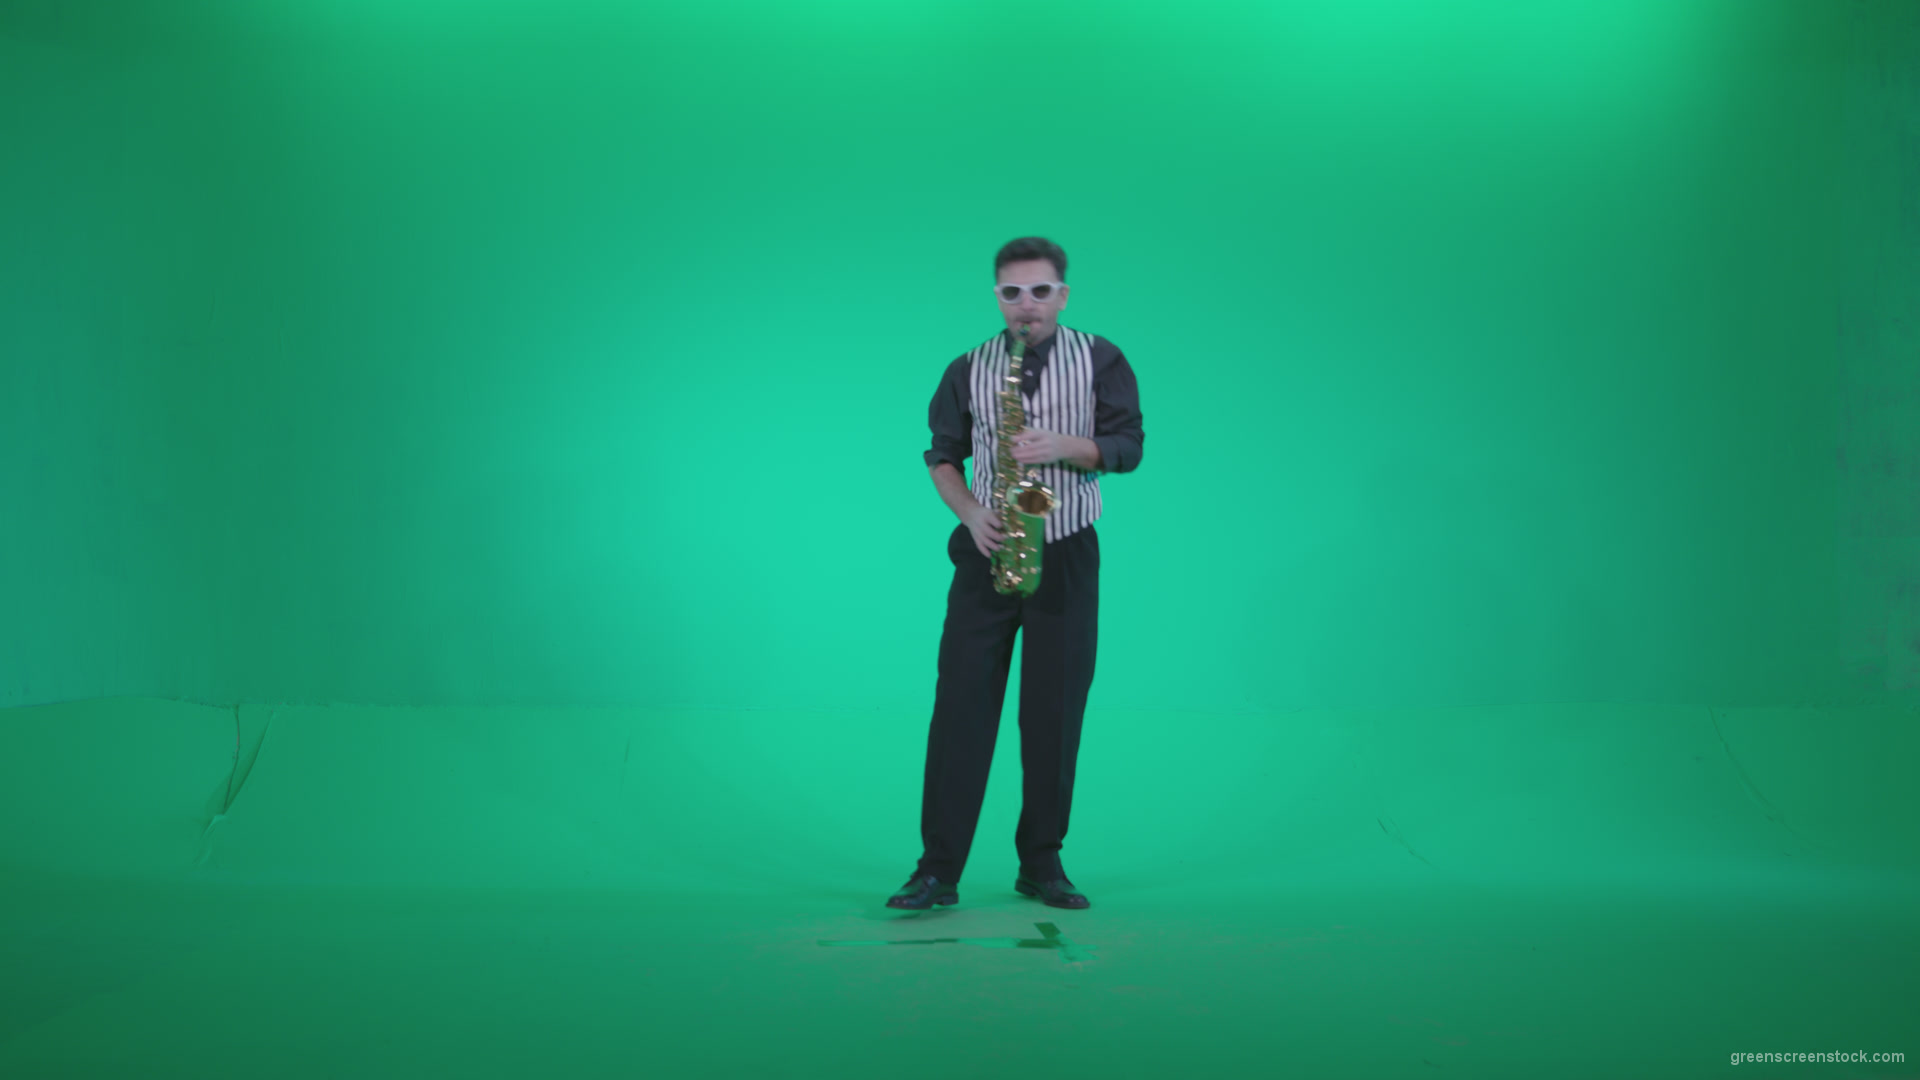 Saxophone-Virtuoso-Performer-s4_002 Green Screen Stock